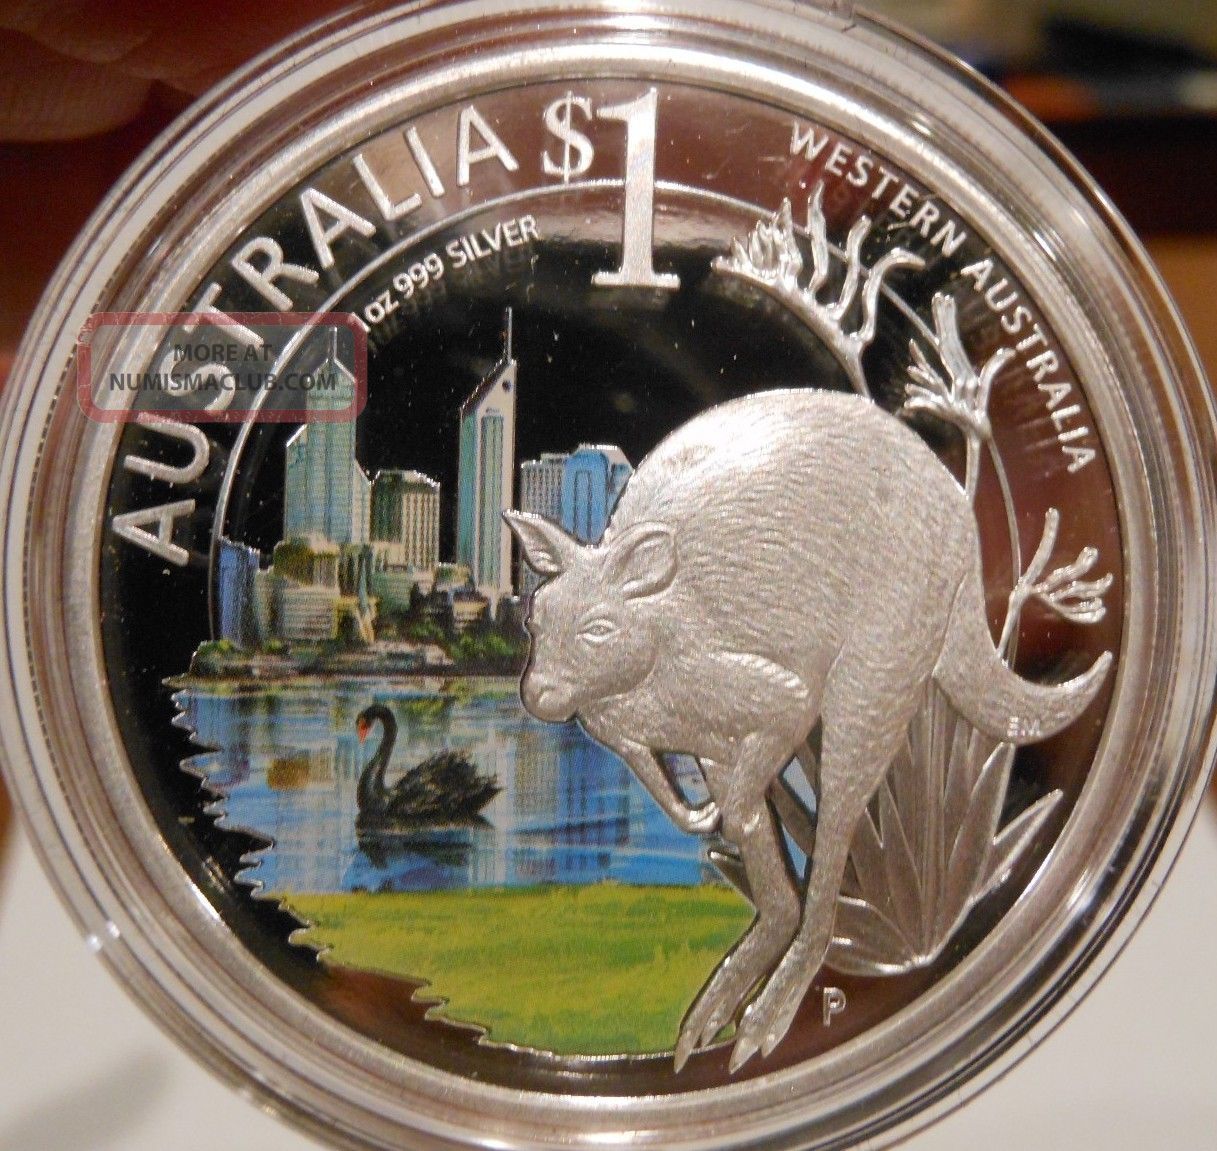 Celebrate Australia Western Australia 2011 Anda Perth Show 1oz Silver Proof Coin Australia photo